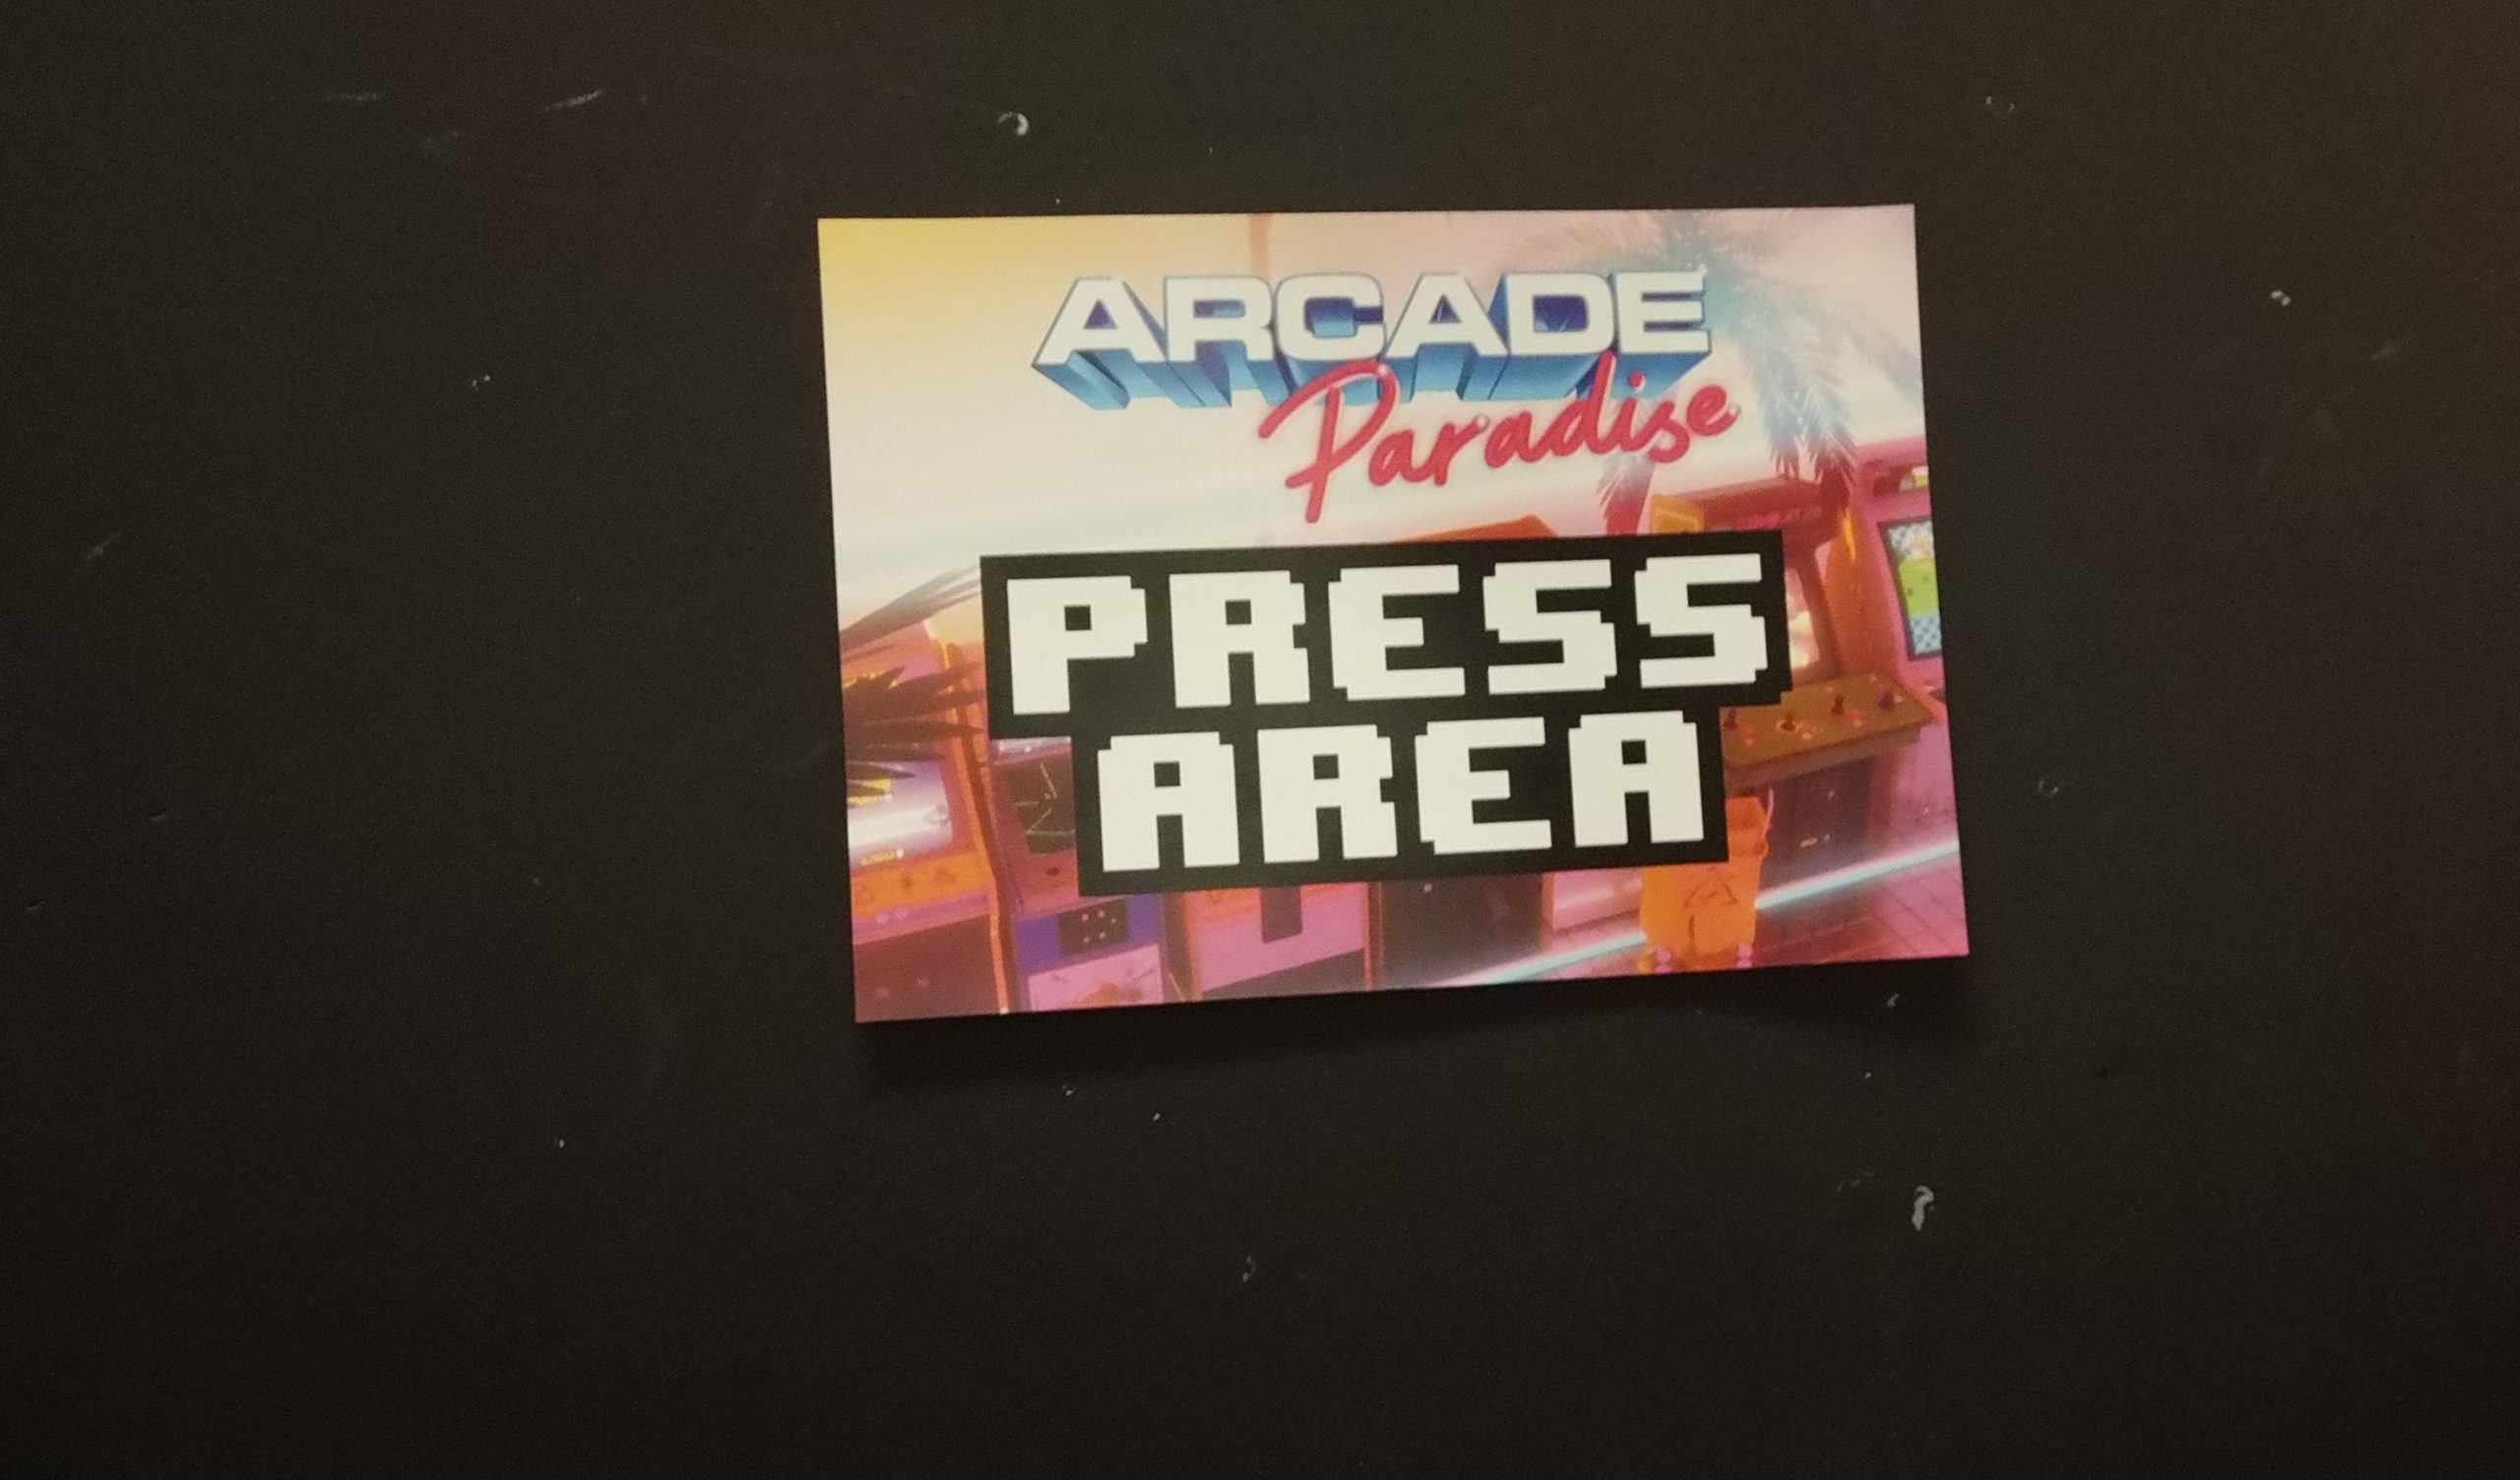 A sign saying Arcade Paradise Press Area